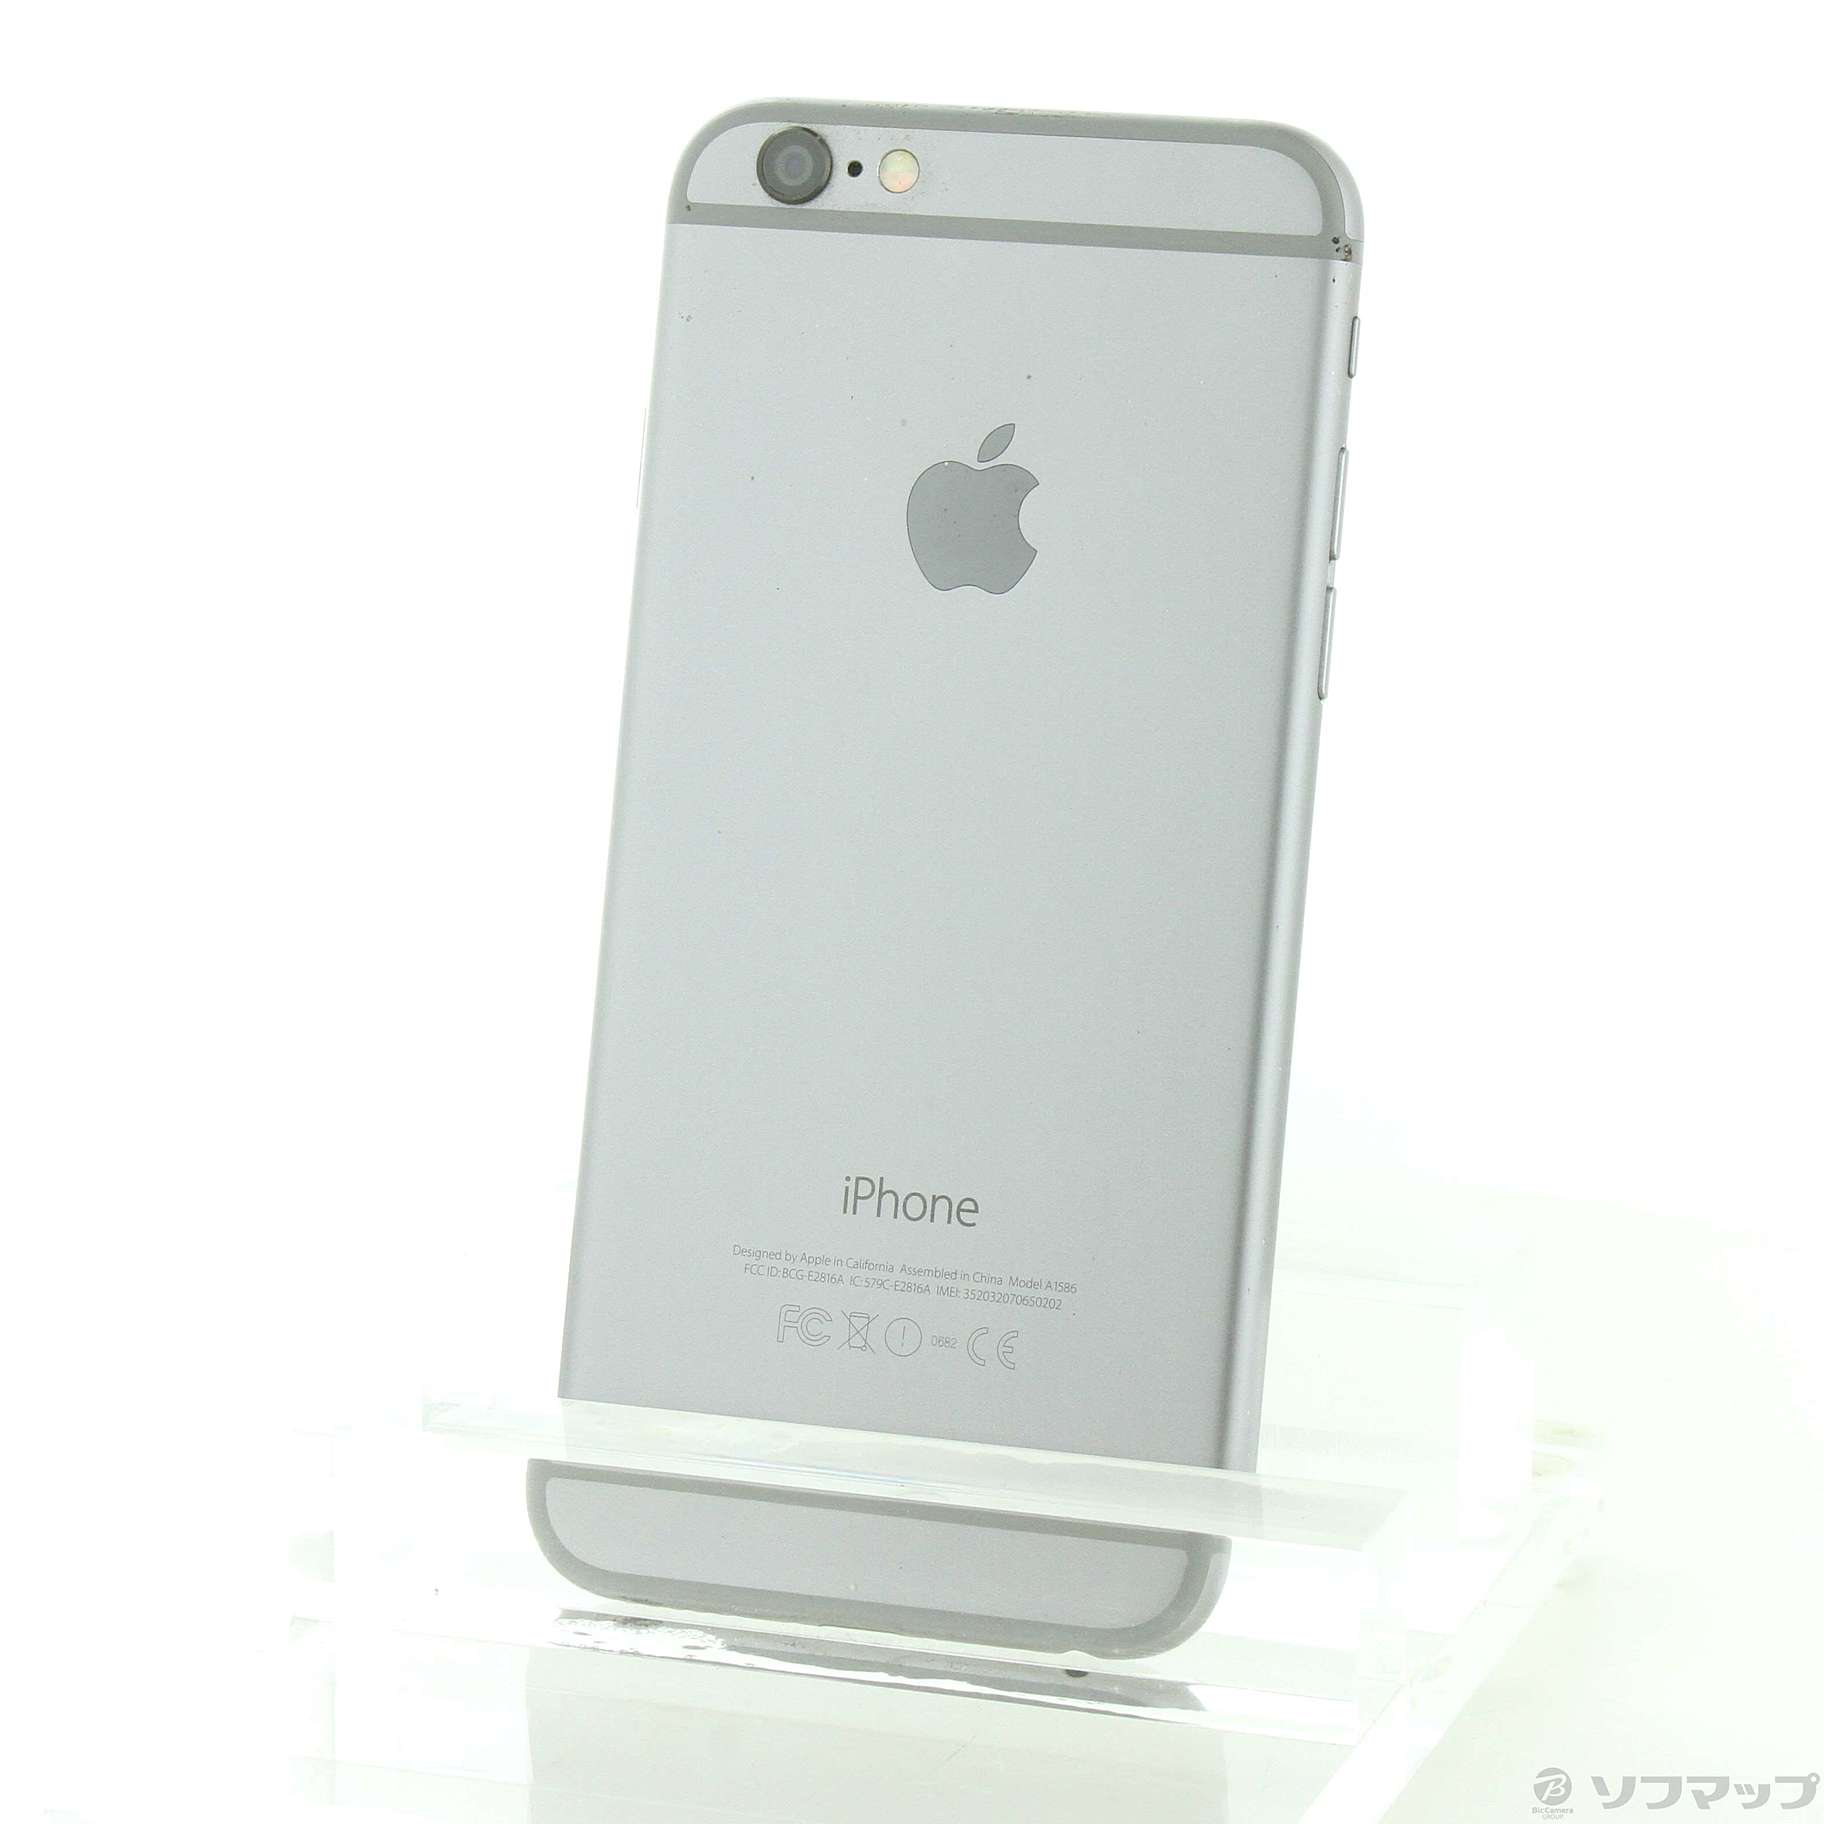 iPhone 6 スペースグレー 16 GB ソフトバンク - スマートフォン本体